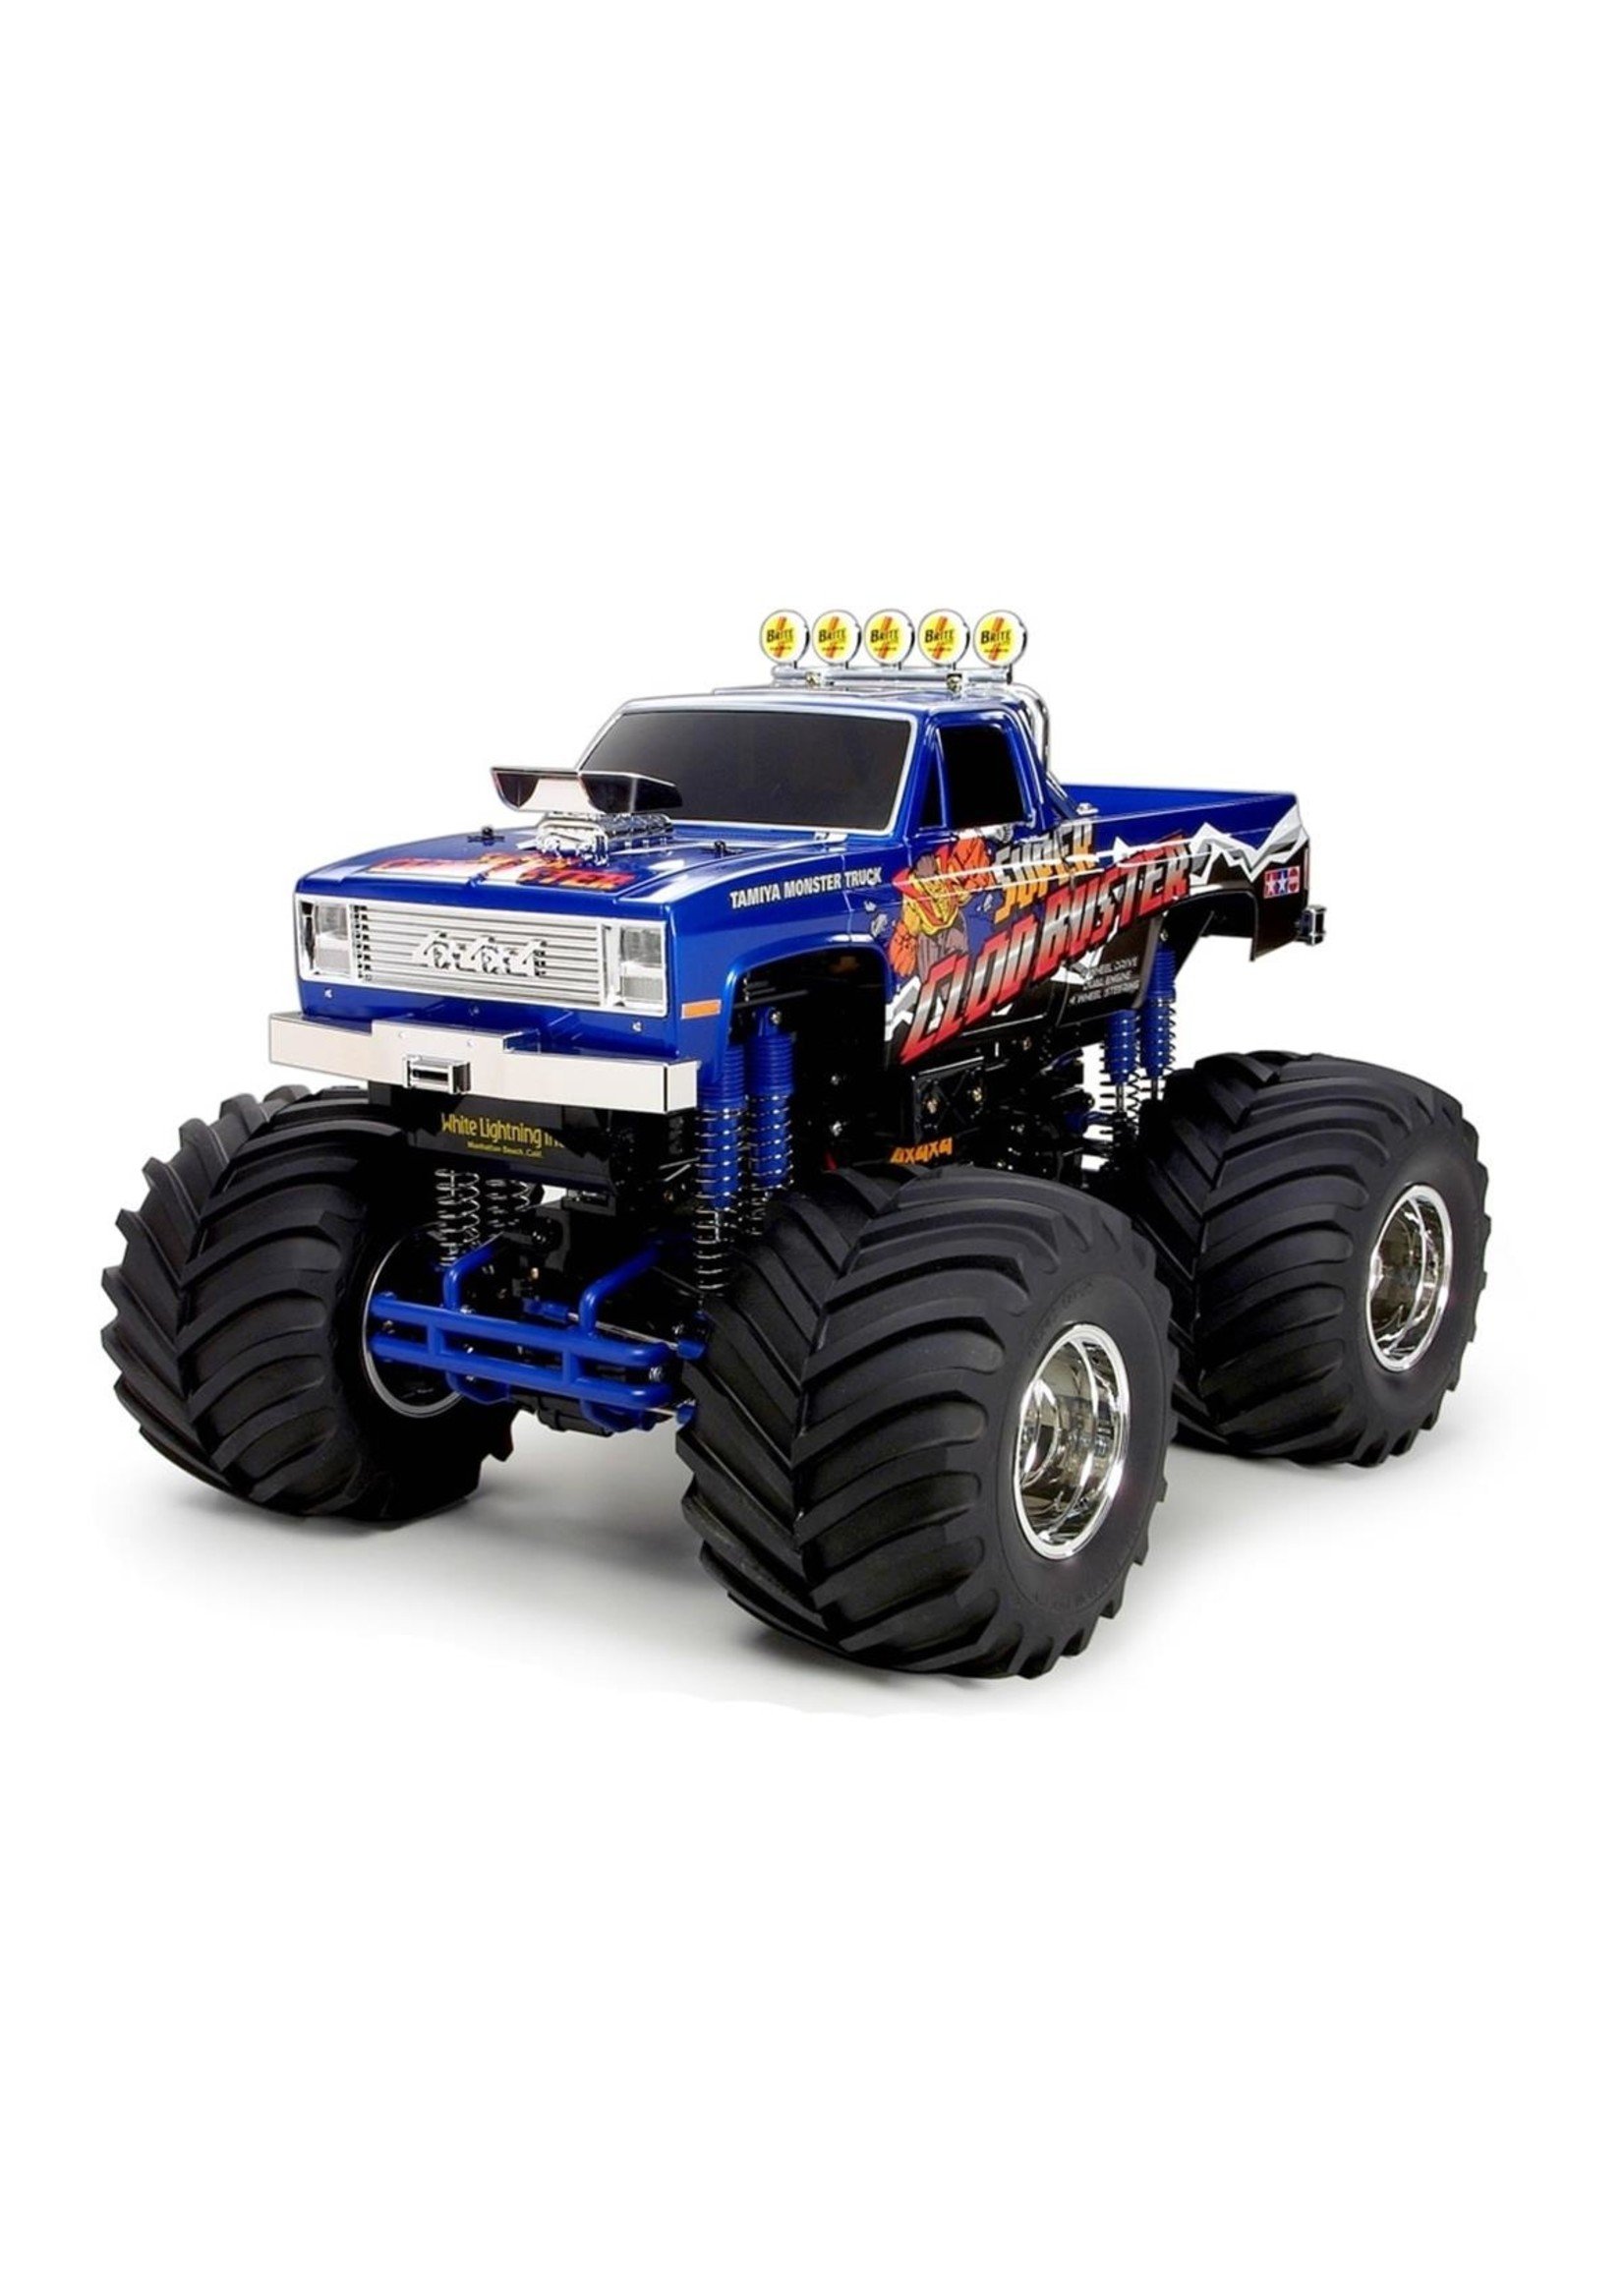  Tamiya Super Clod Buster 4X4X4 Vehicle : Toys & Games